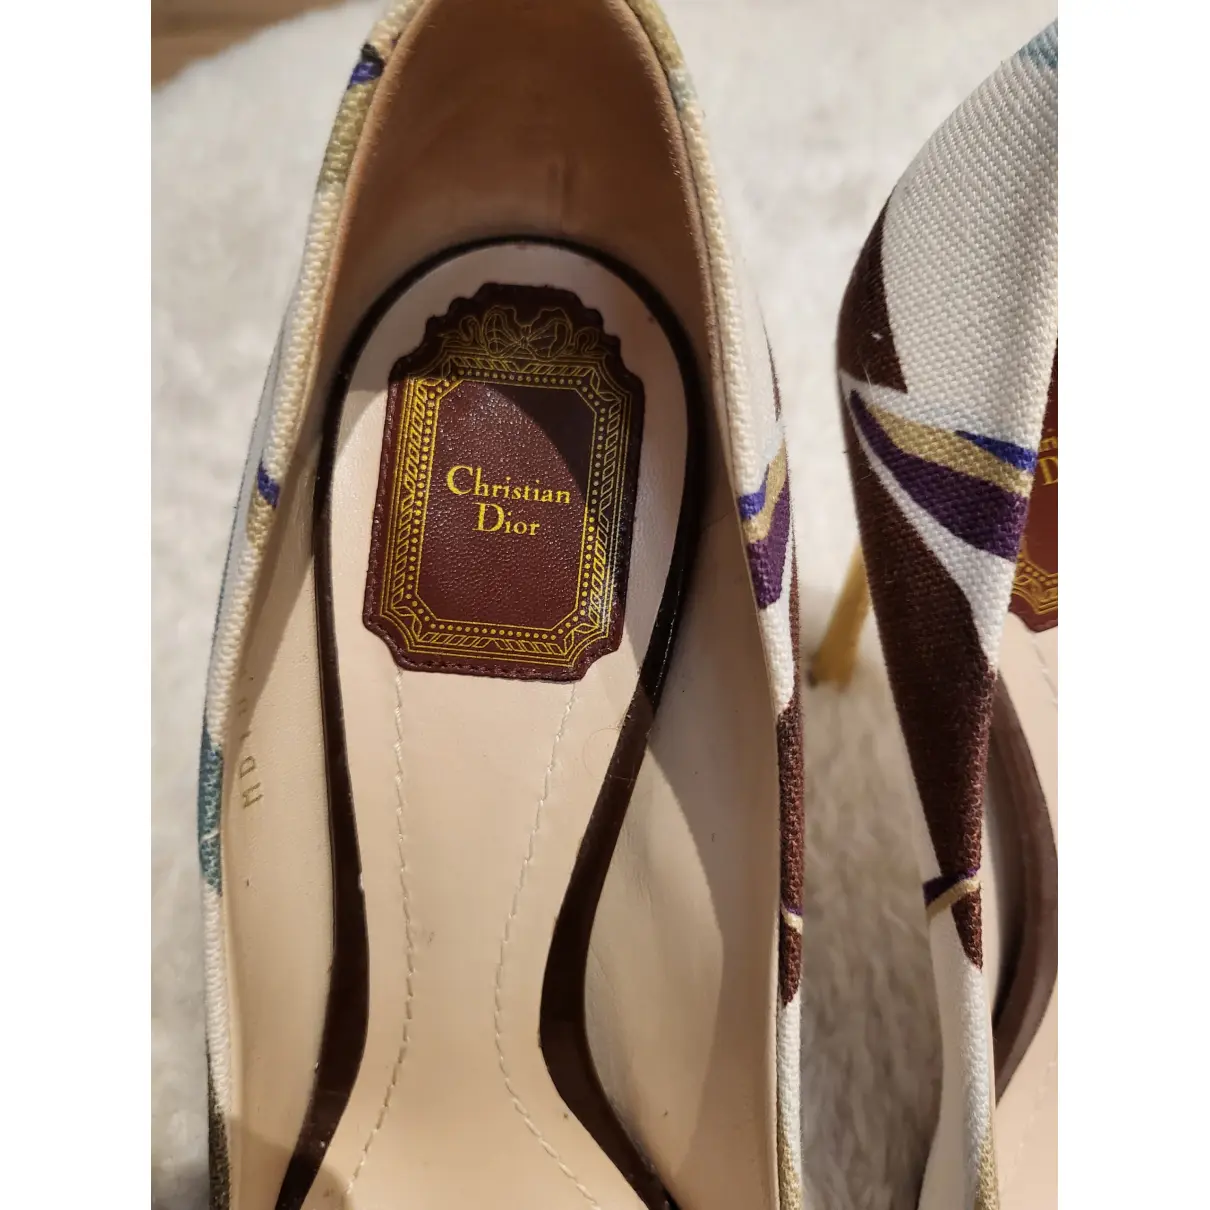 Buy Dior Dior Cherie Pointy Pump cloth heels online